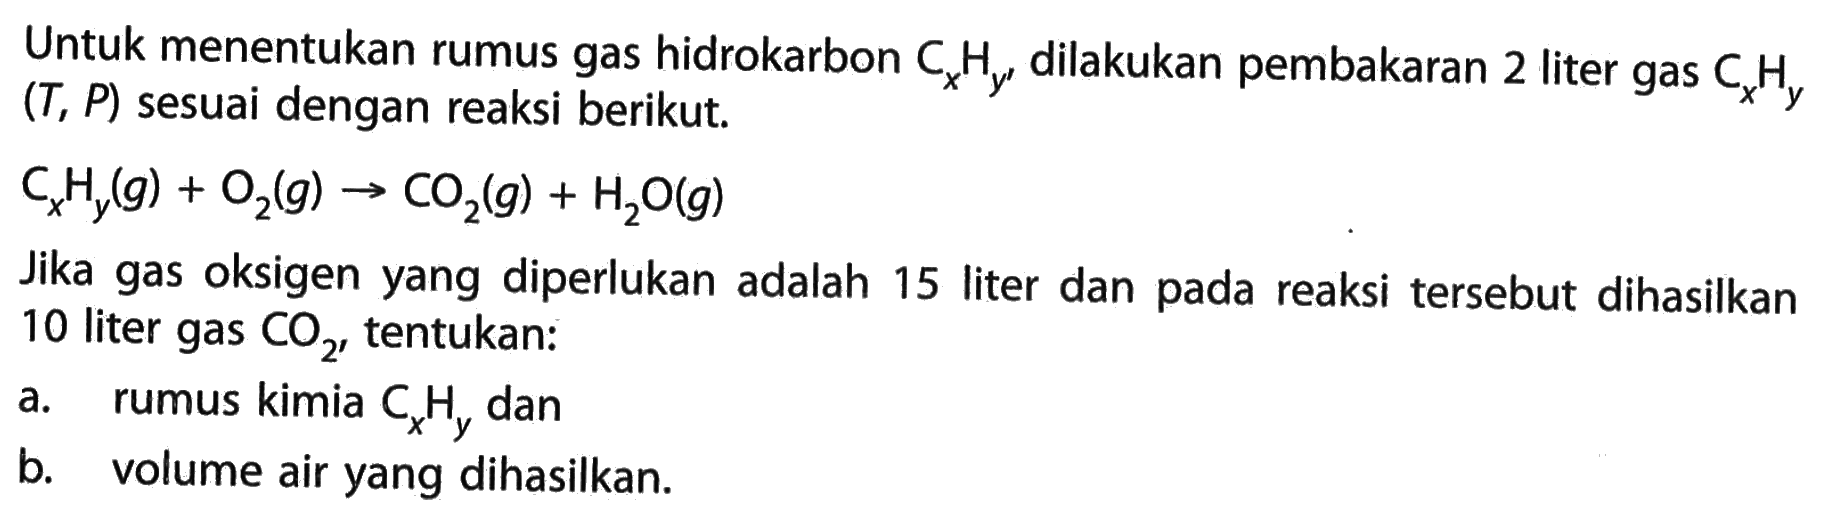 Untuk menentukan rumus gas hidrokarbon CxHy, dilakukan pembakaran 2 liter gas CxHy (T, P) sesuai dengan reaksi berikut. CxHy(g)+O2(g) -> CO2(g)+H2O(g) Jika gas oksigen yang diperlukan adalah 15 liter dan pada reaksi tersebut dihasilkan 10 liter gas CO2, tentukan: a. rumus kimia CxHy dan b. volume air yang dihasilkan.